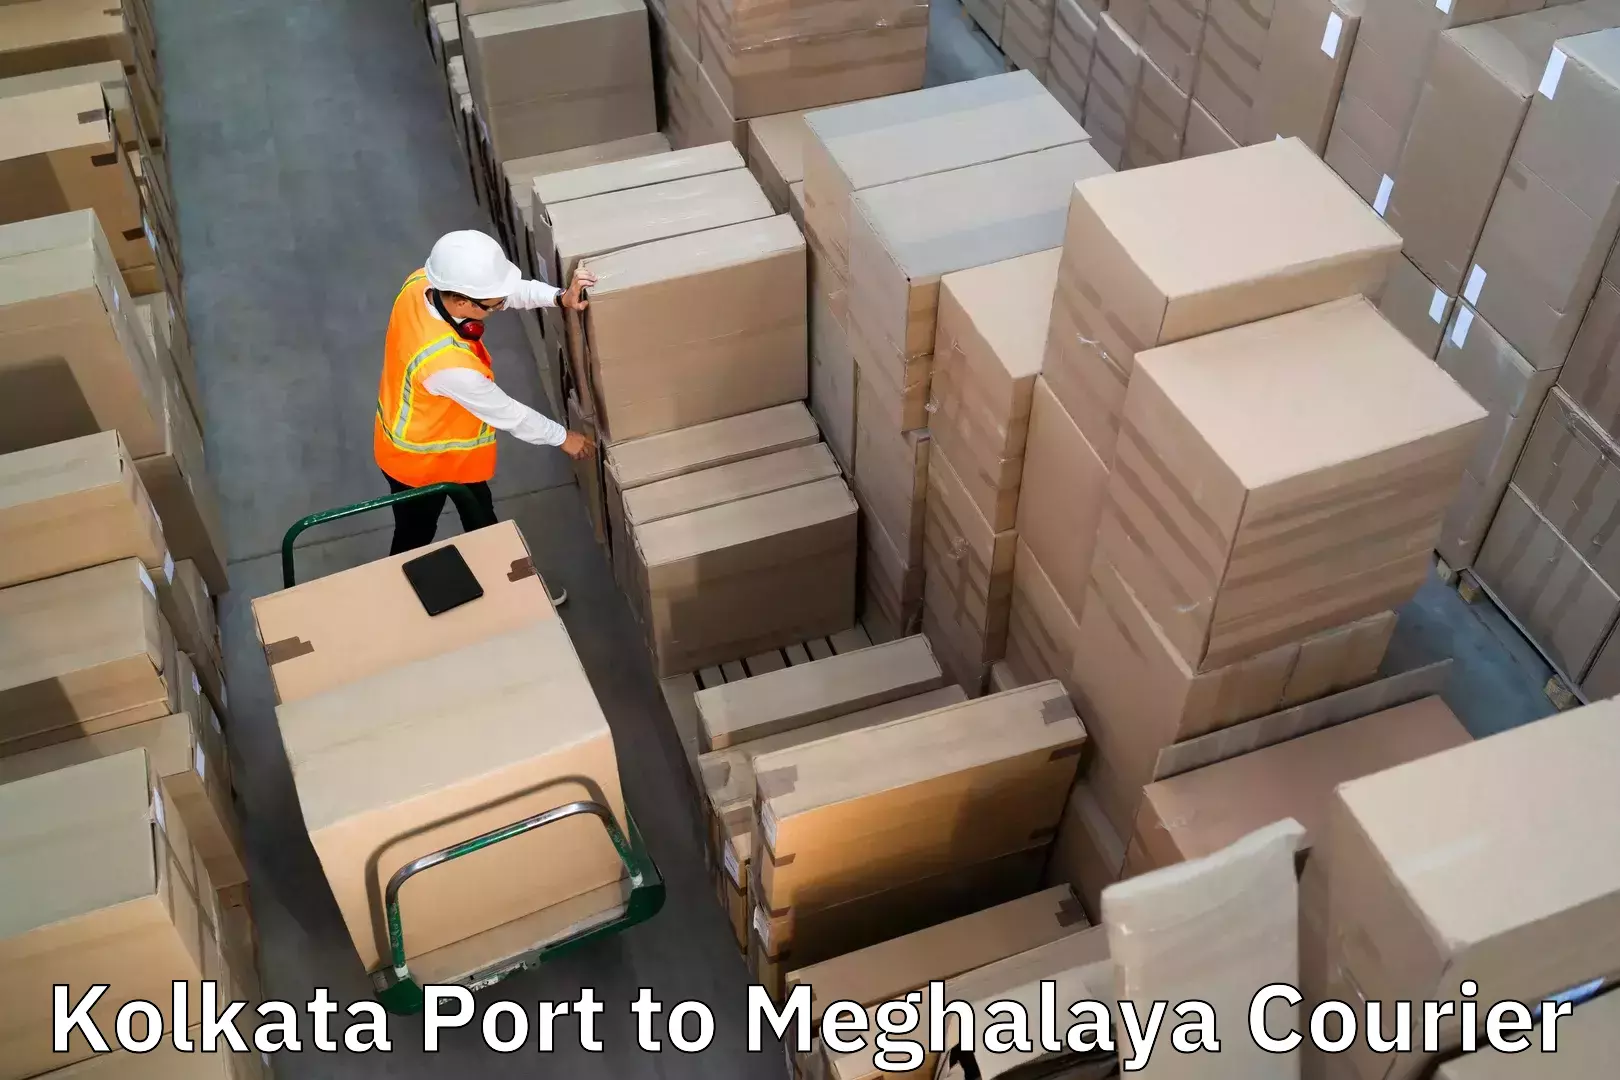 Baggage transport professionals Kolkata Port to Dkhiah West